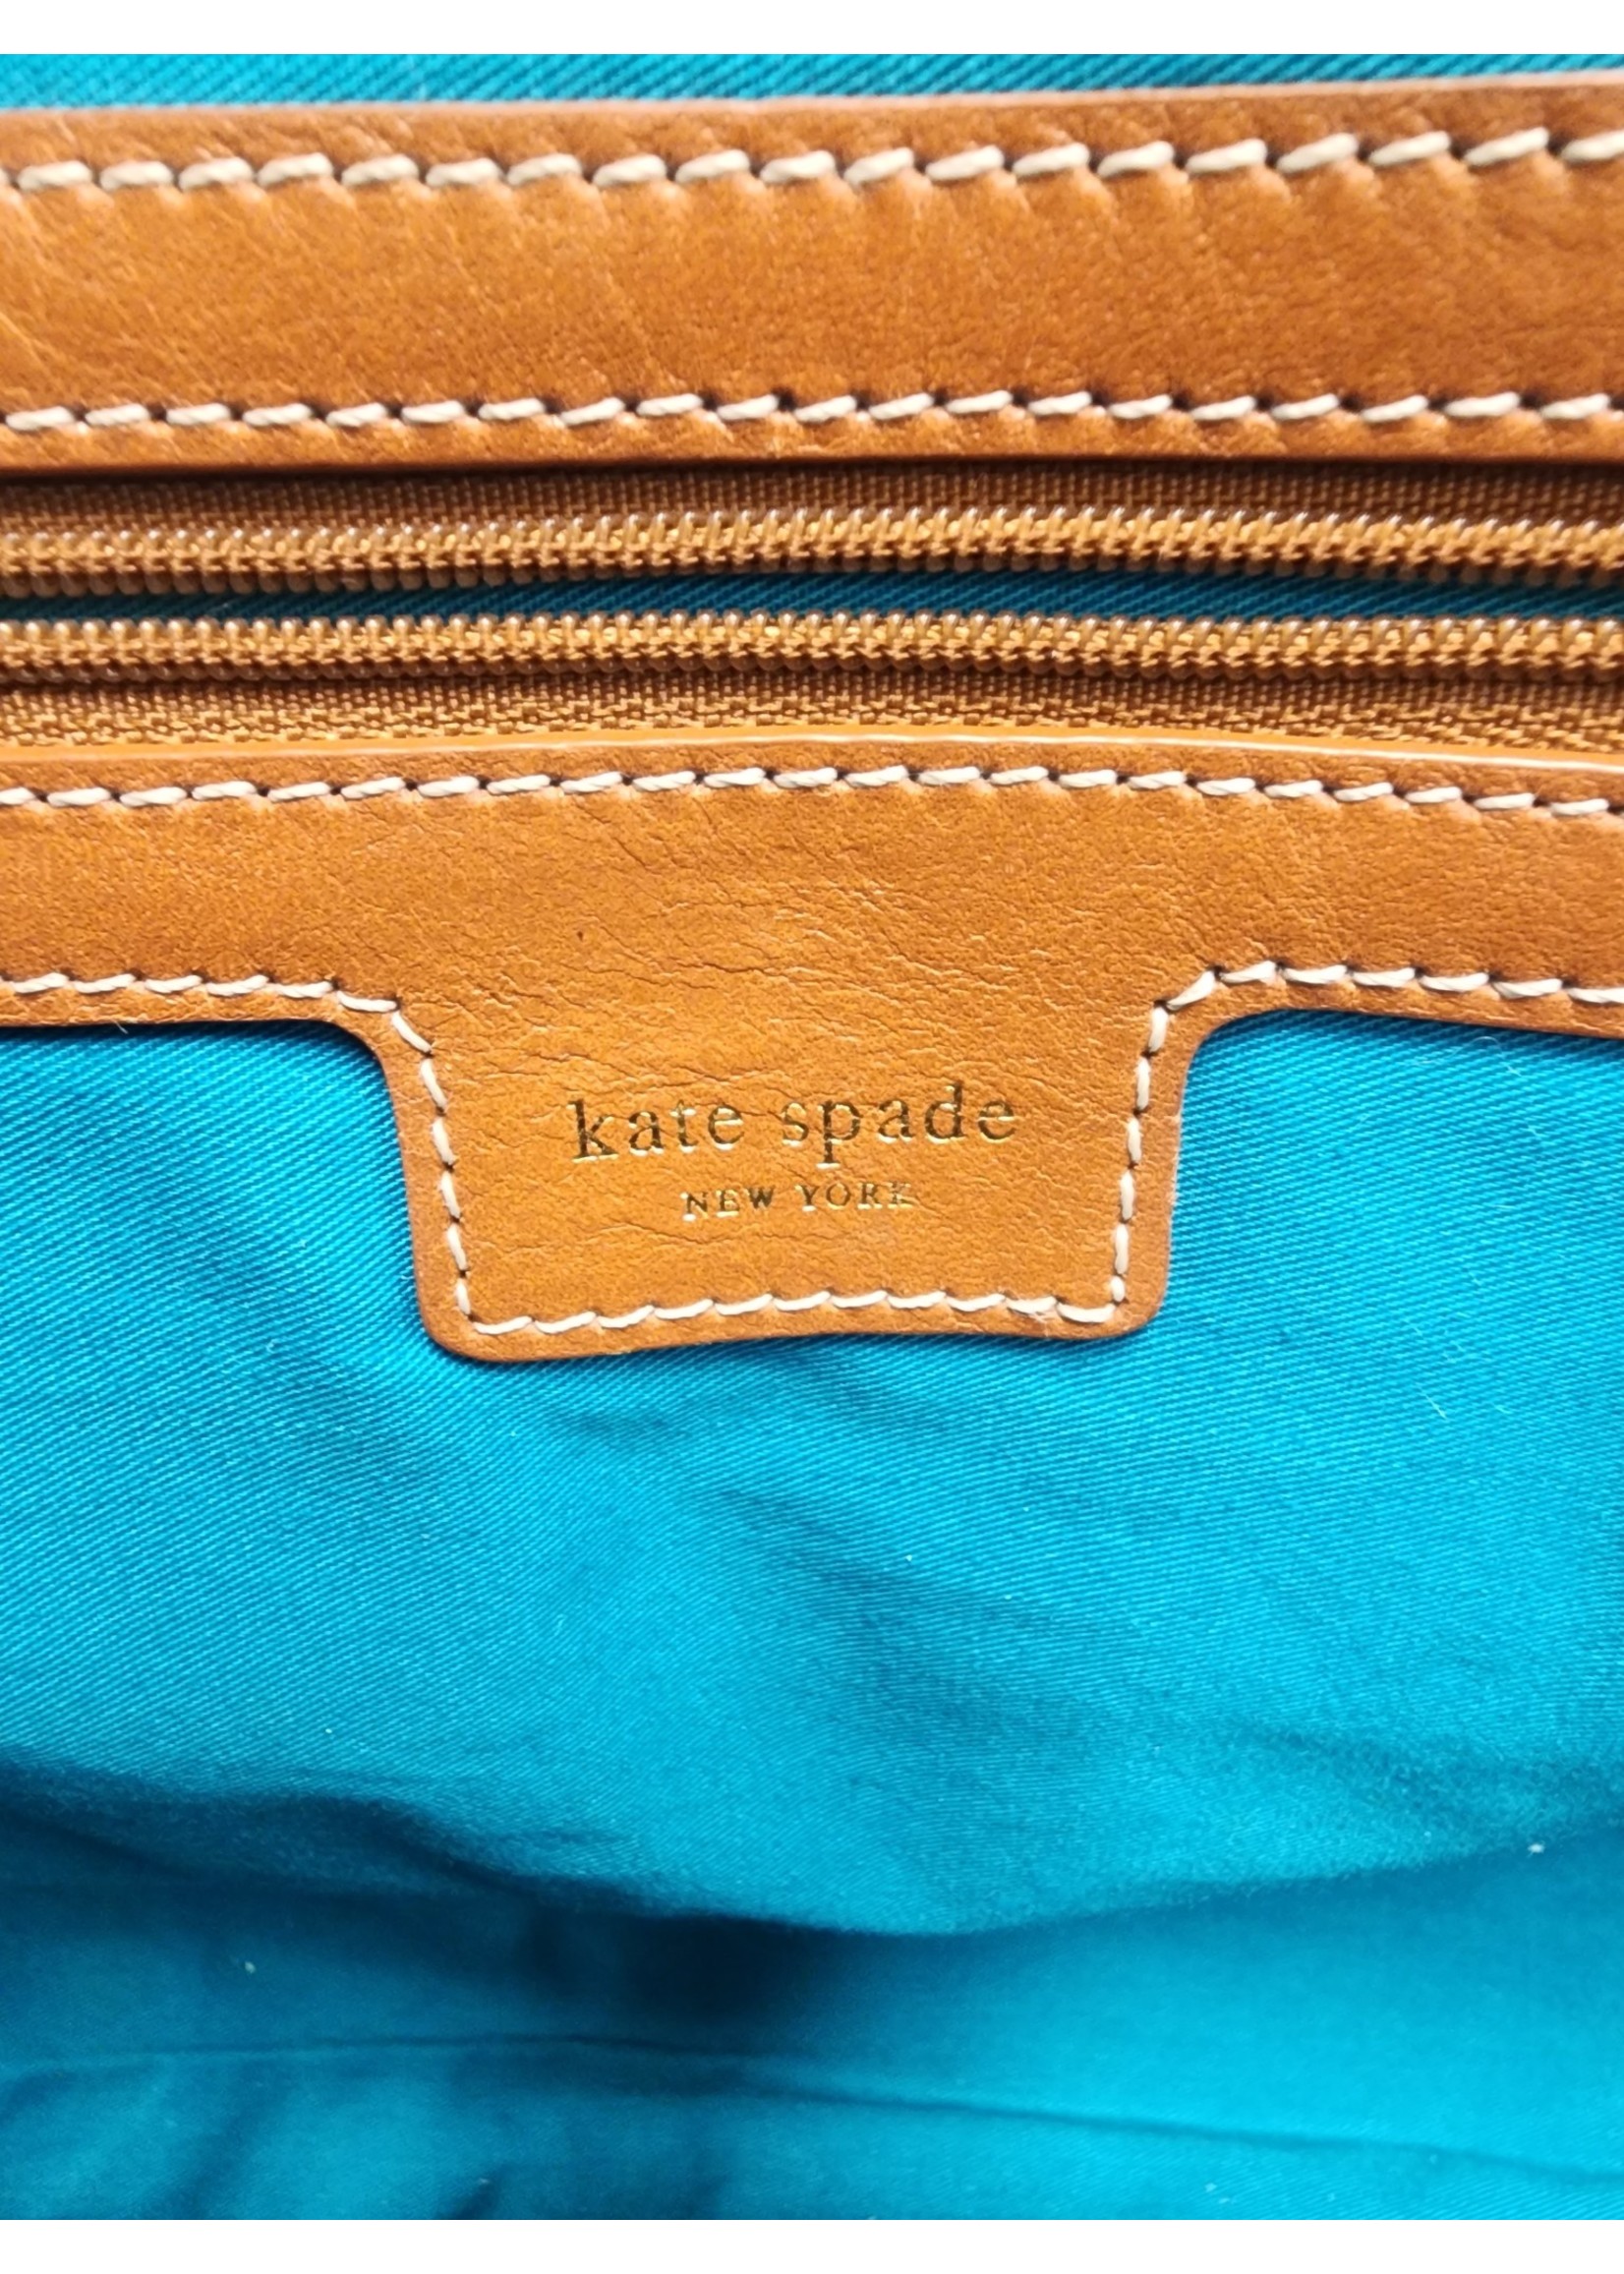 Kate Spade Purse Tote Handbag Tan Camel Pebbled Leather Gold Accents,  Tassels | eBay